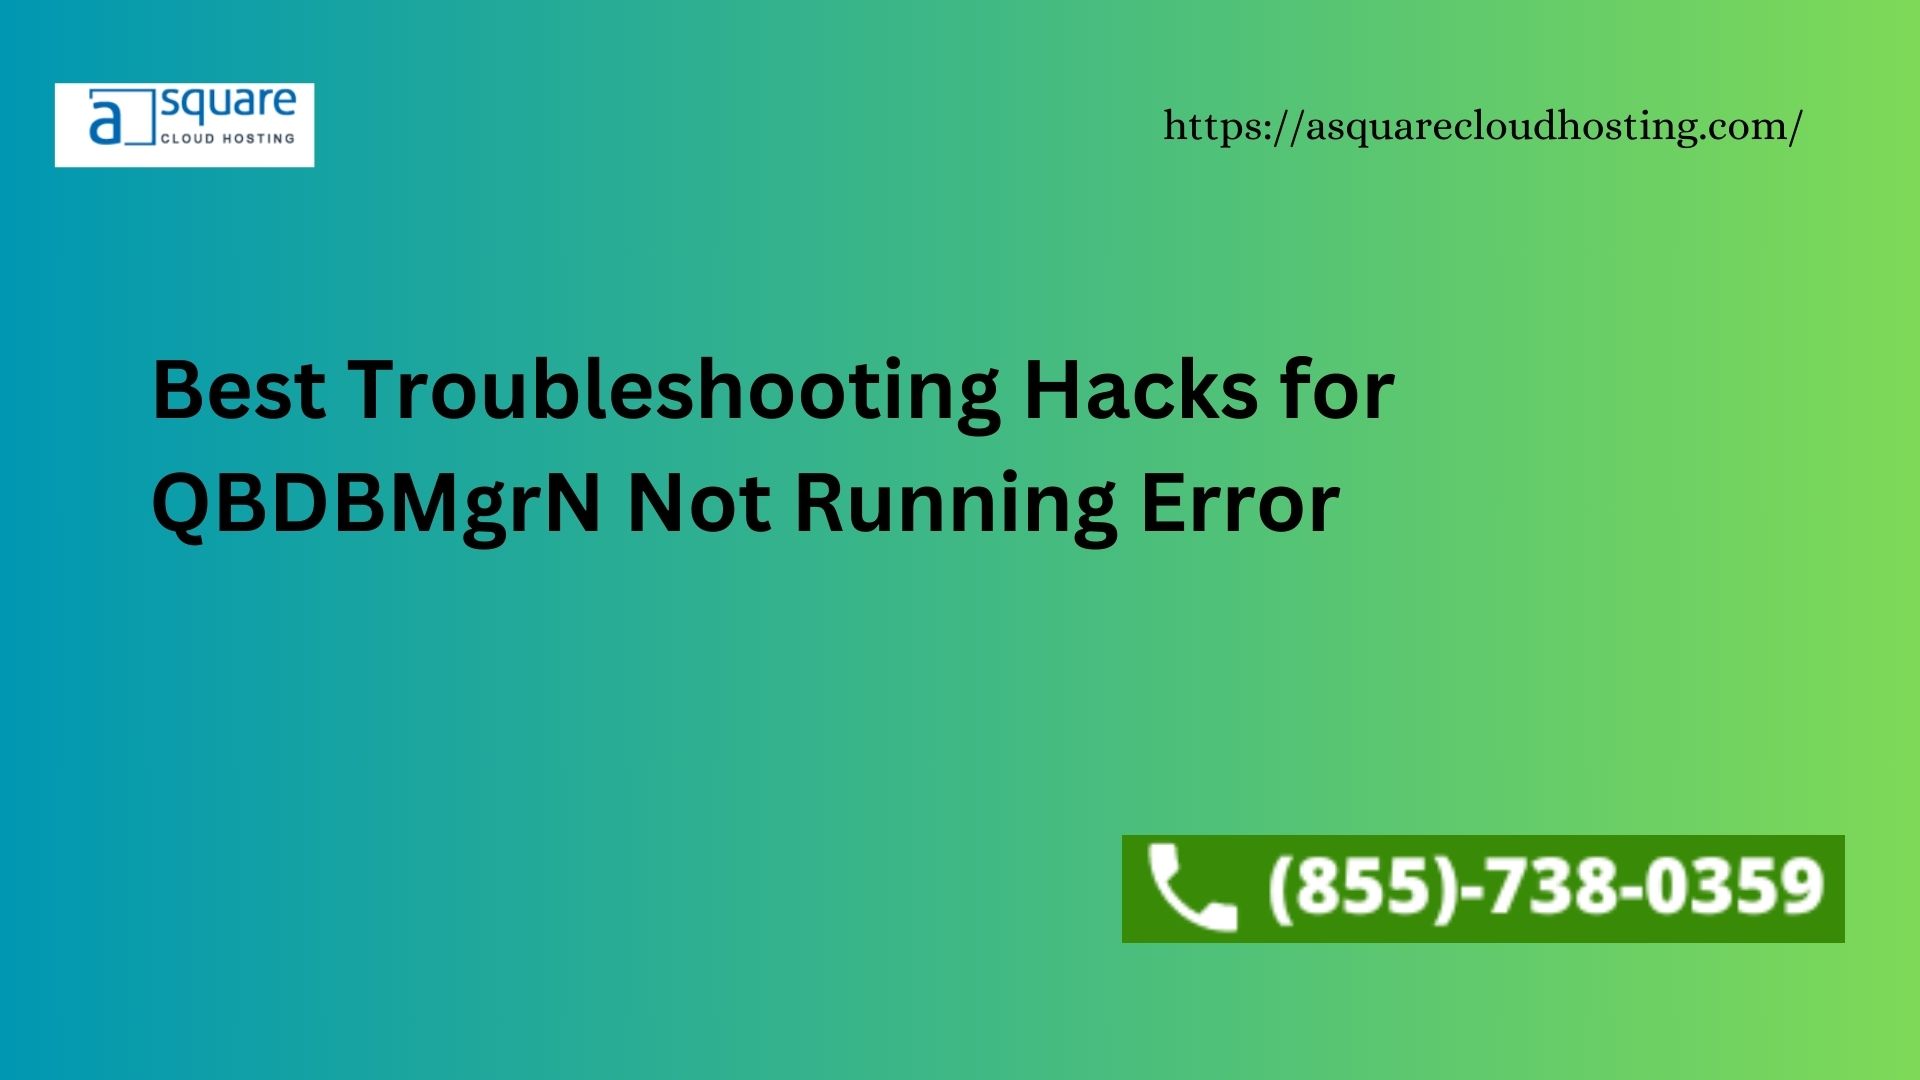 Best Troubleshooting Hacks for QBDBMgrN Not Running Error